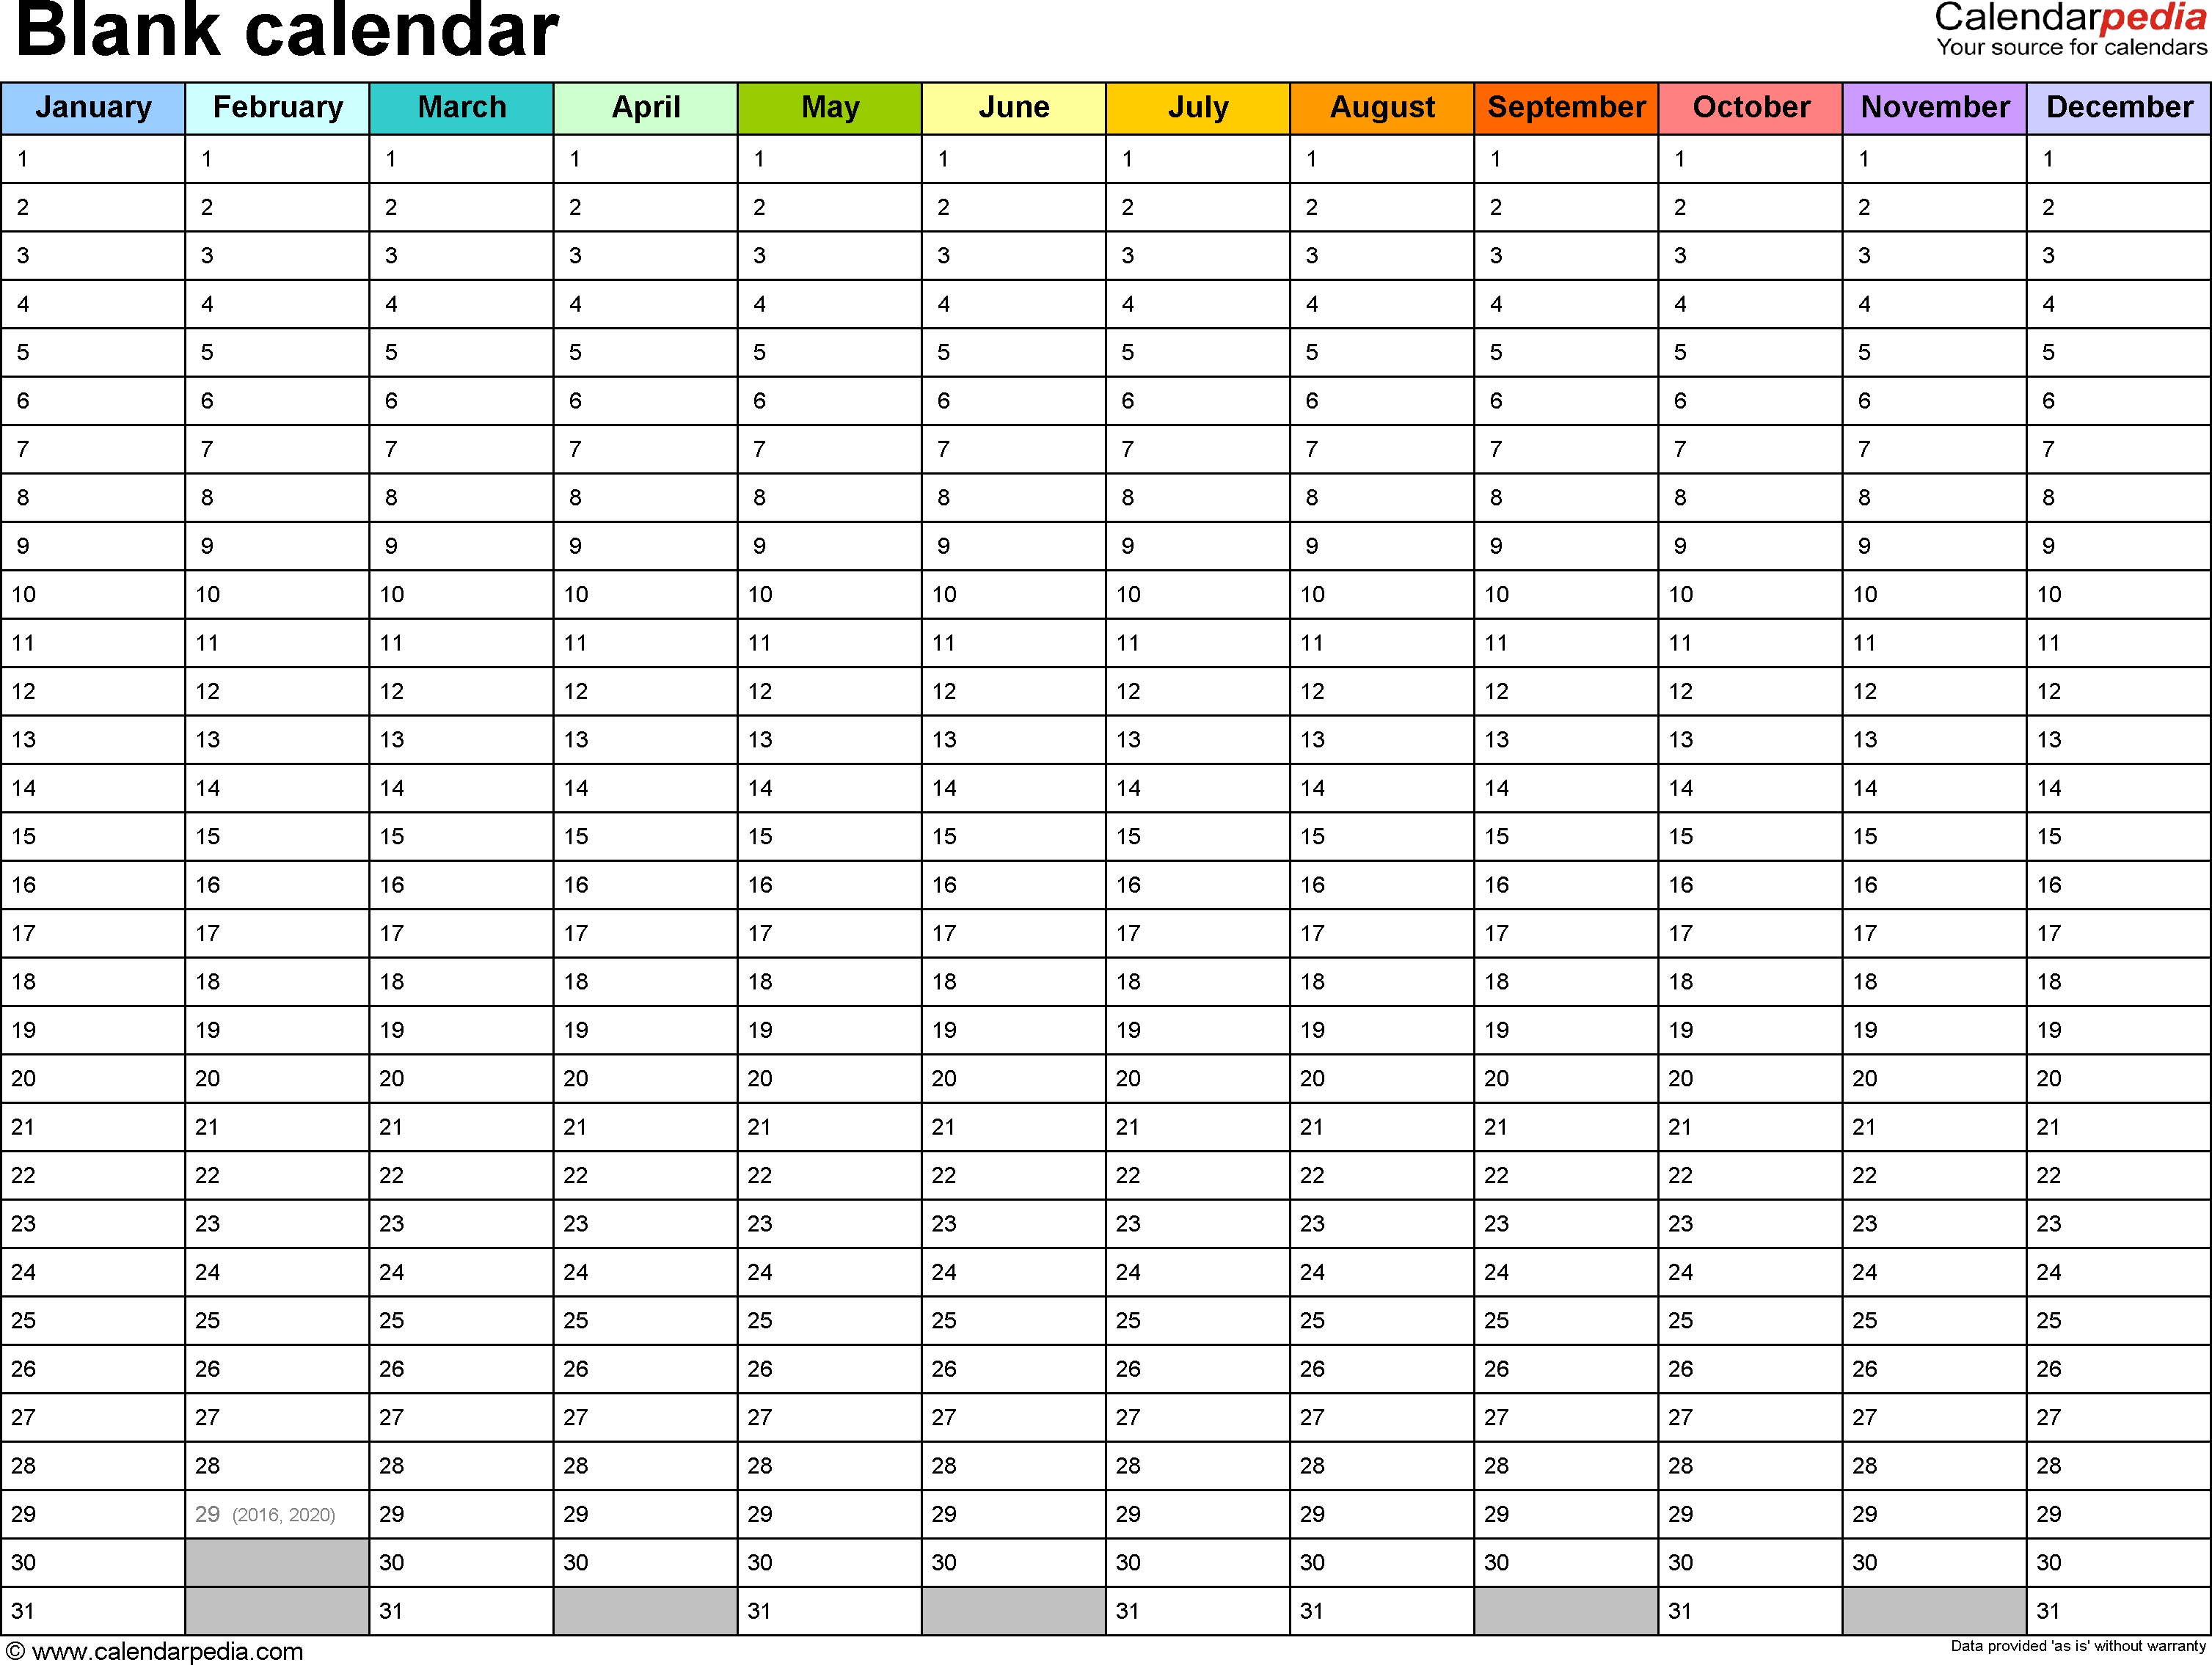 Blank Calendar - 9 Free Printable Microsoft Word Templates pertaining to Blank Year At A Glance Calendar Template